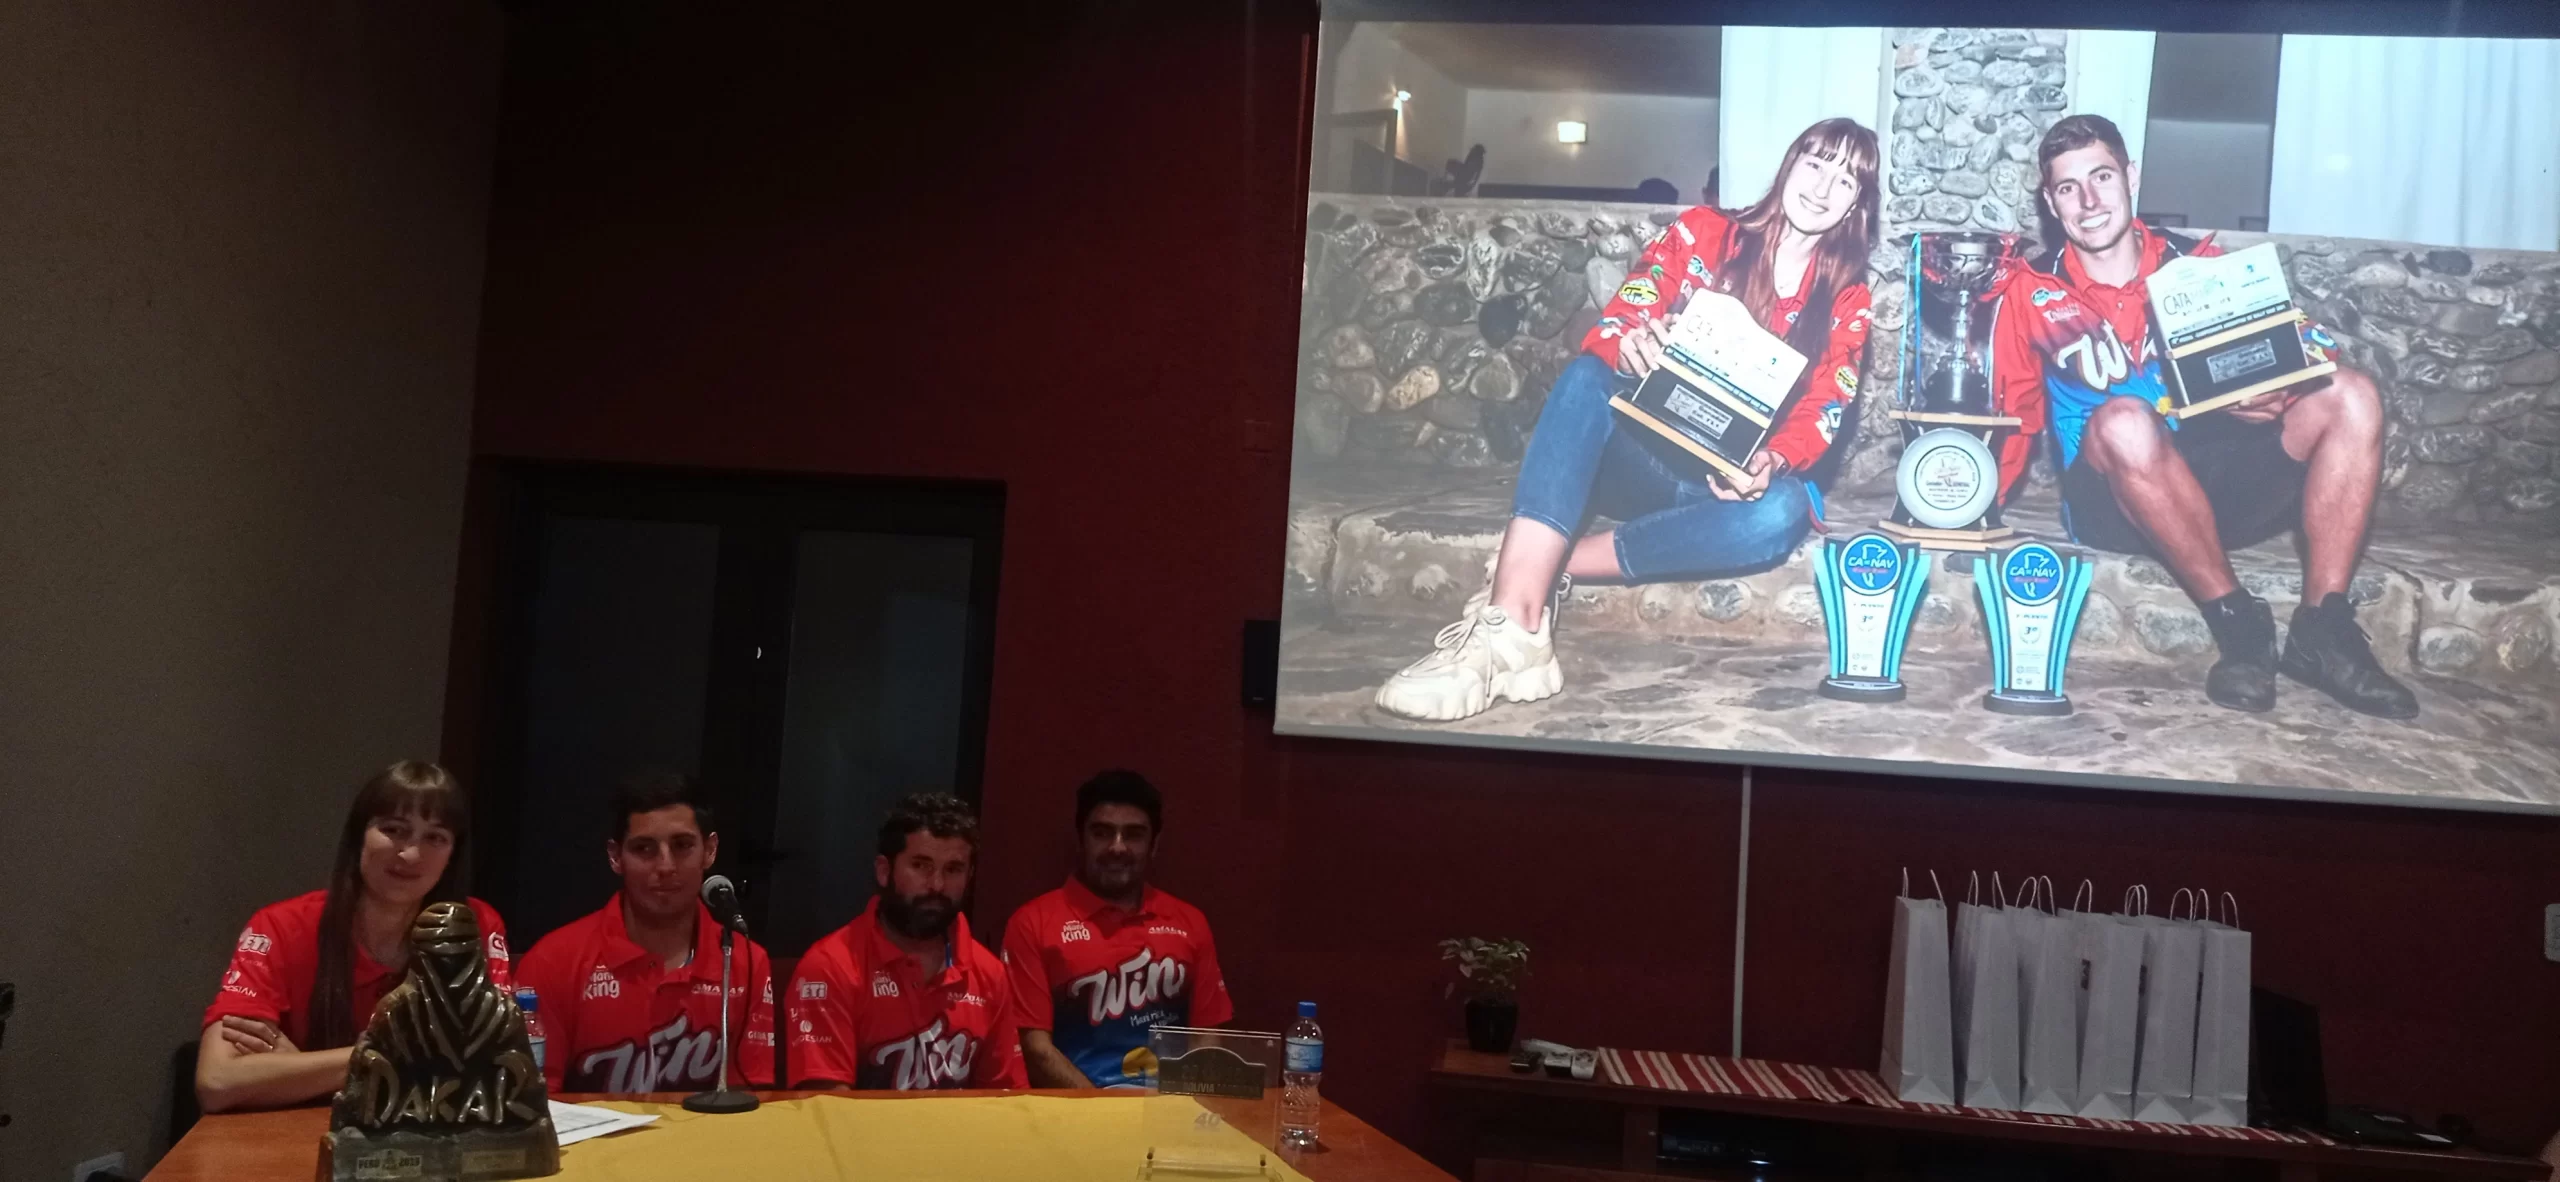 Primer Dakar como matrimonio: Los Cavigliasso presentaron su equipo